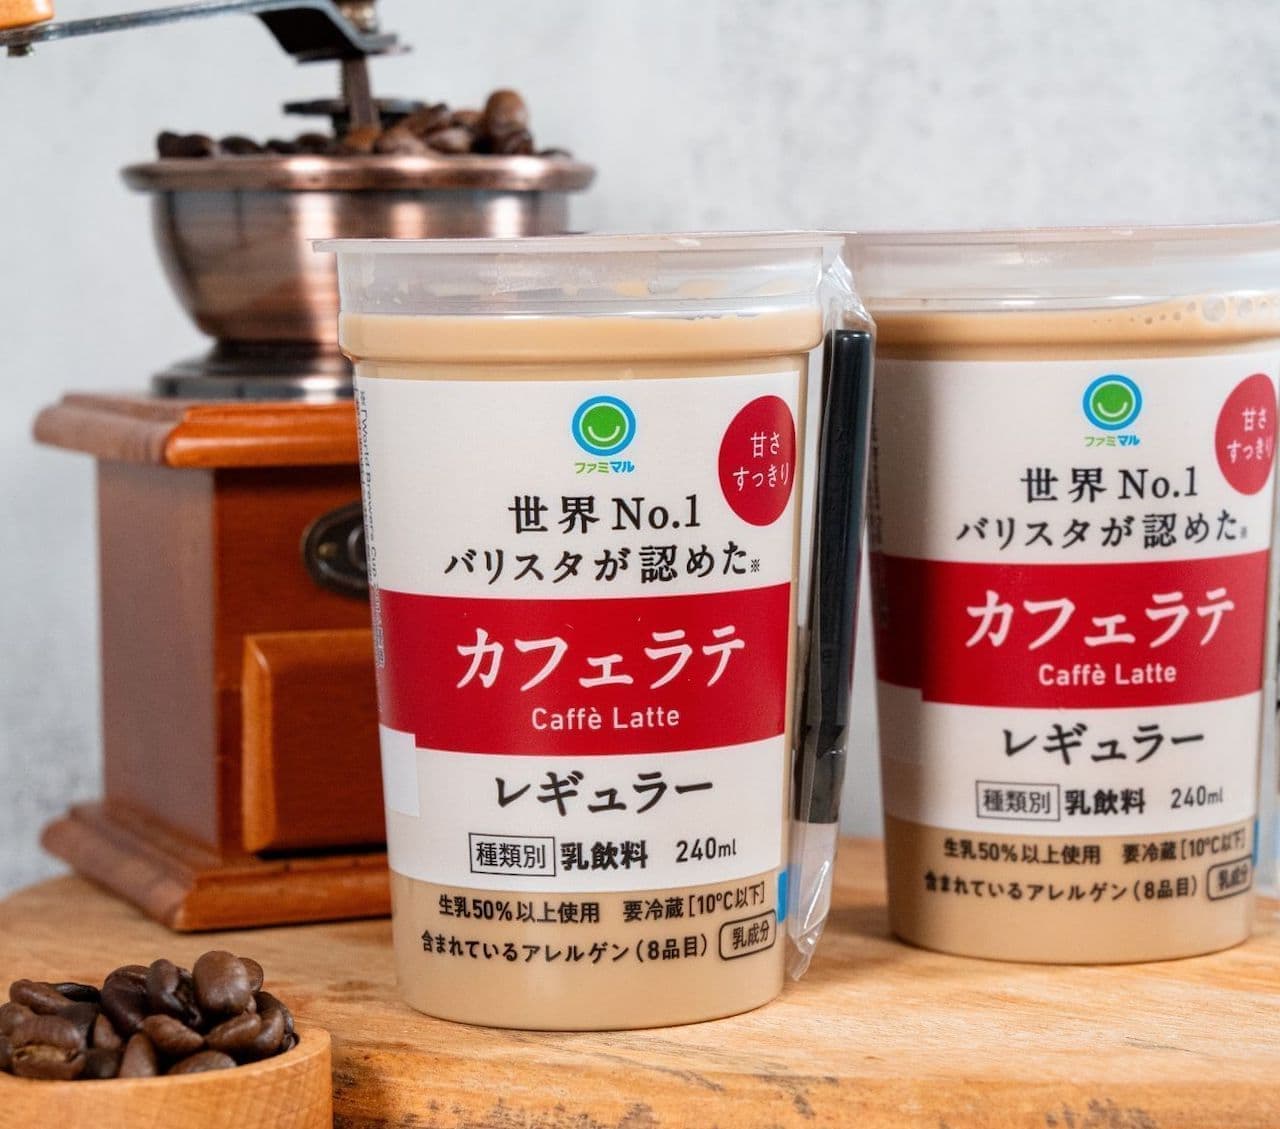 Famima Cafe Latte Regular Renewal